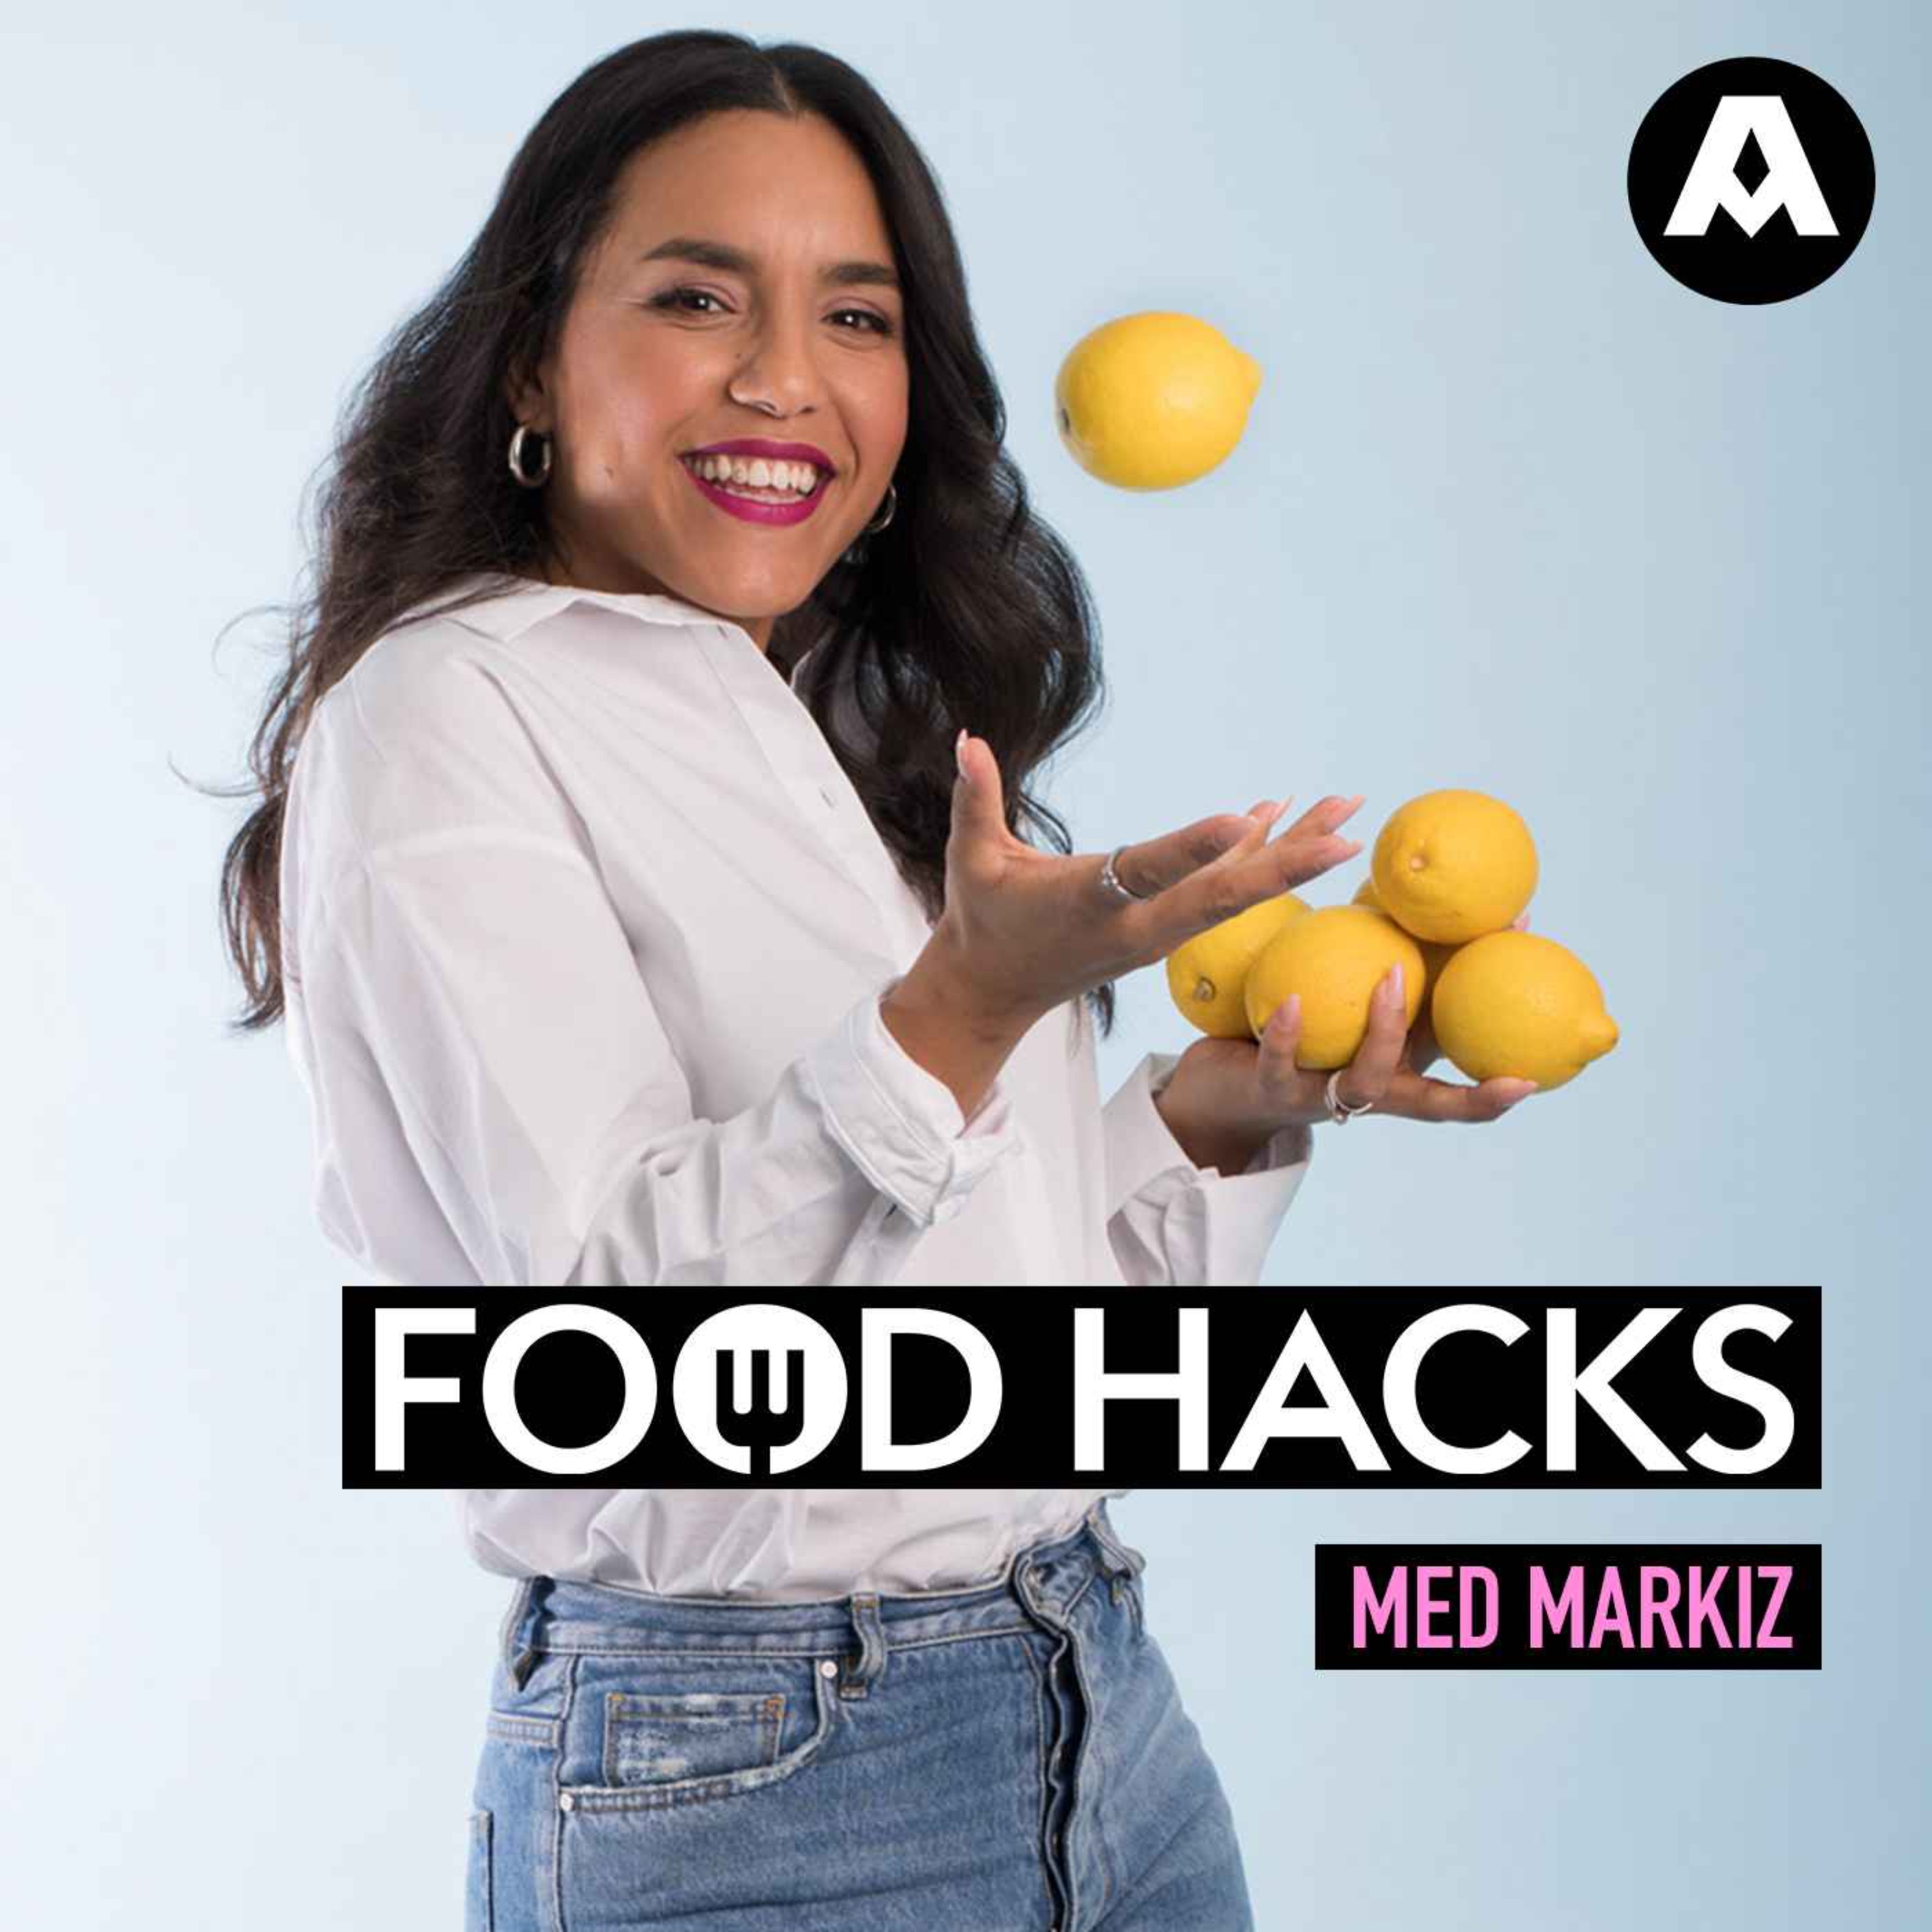 Food hacks: Auberginen